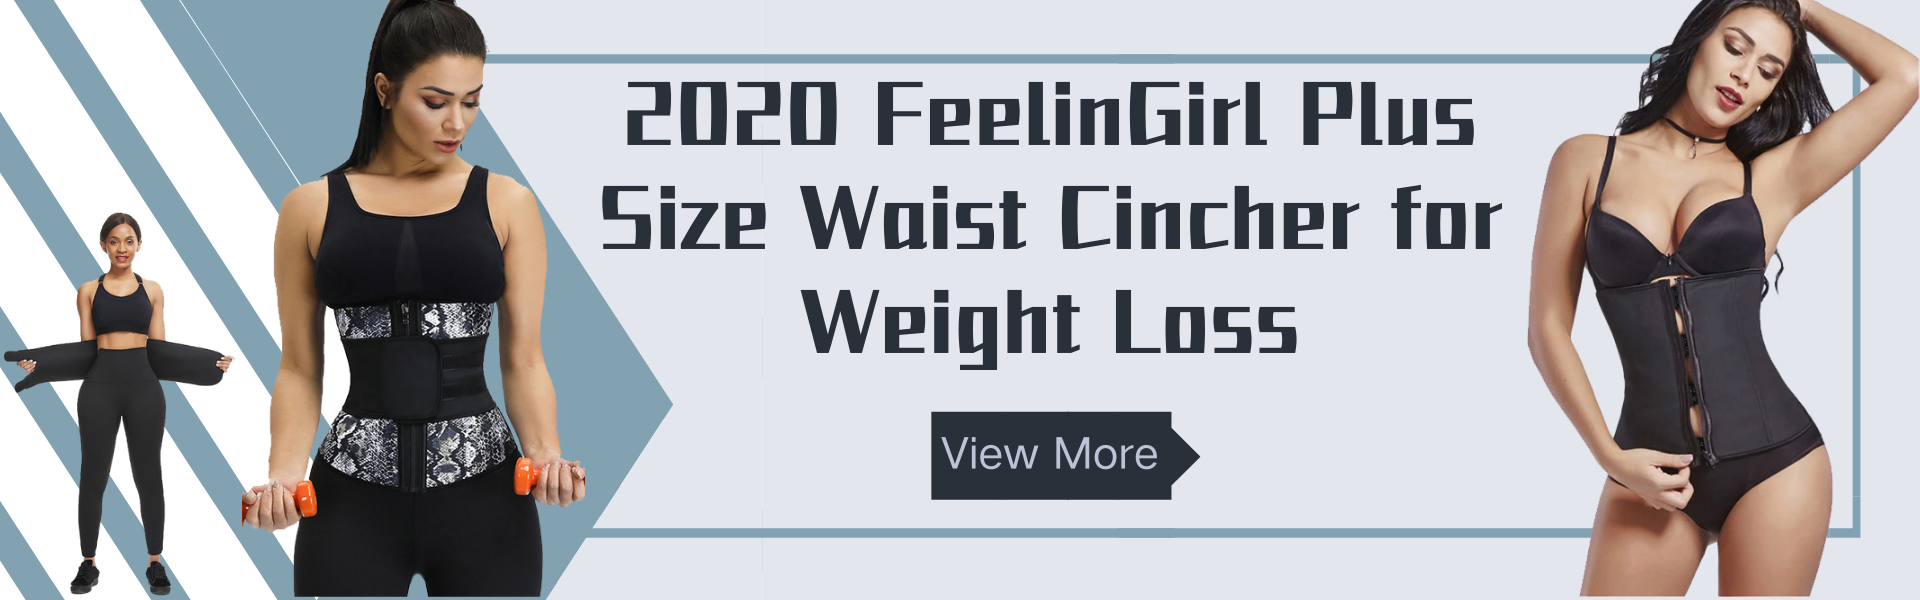 2020 FeelinGirl Plus Size Waist Cincher for Weight Loss